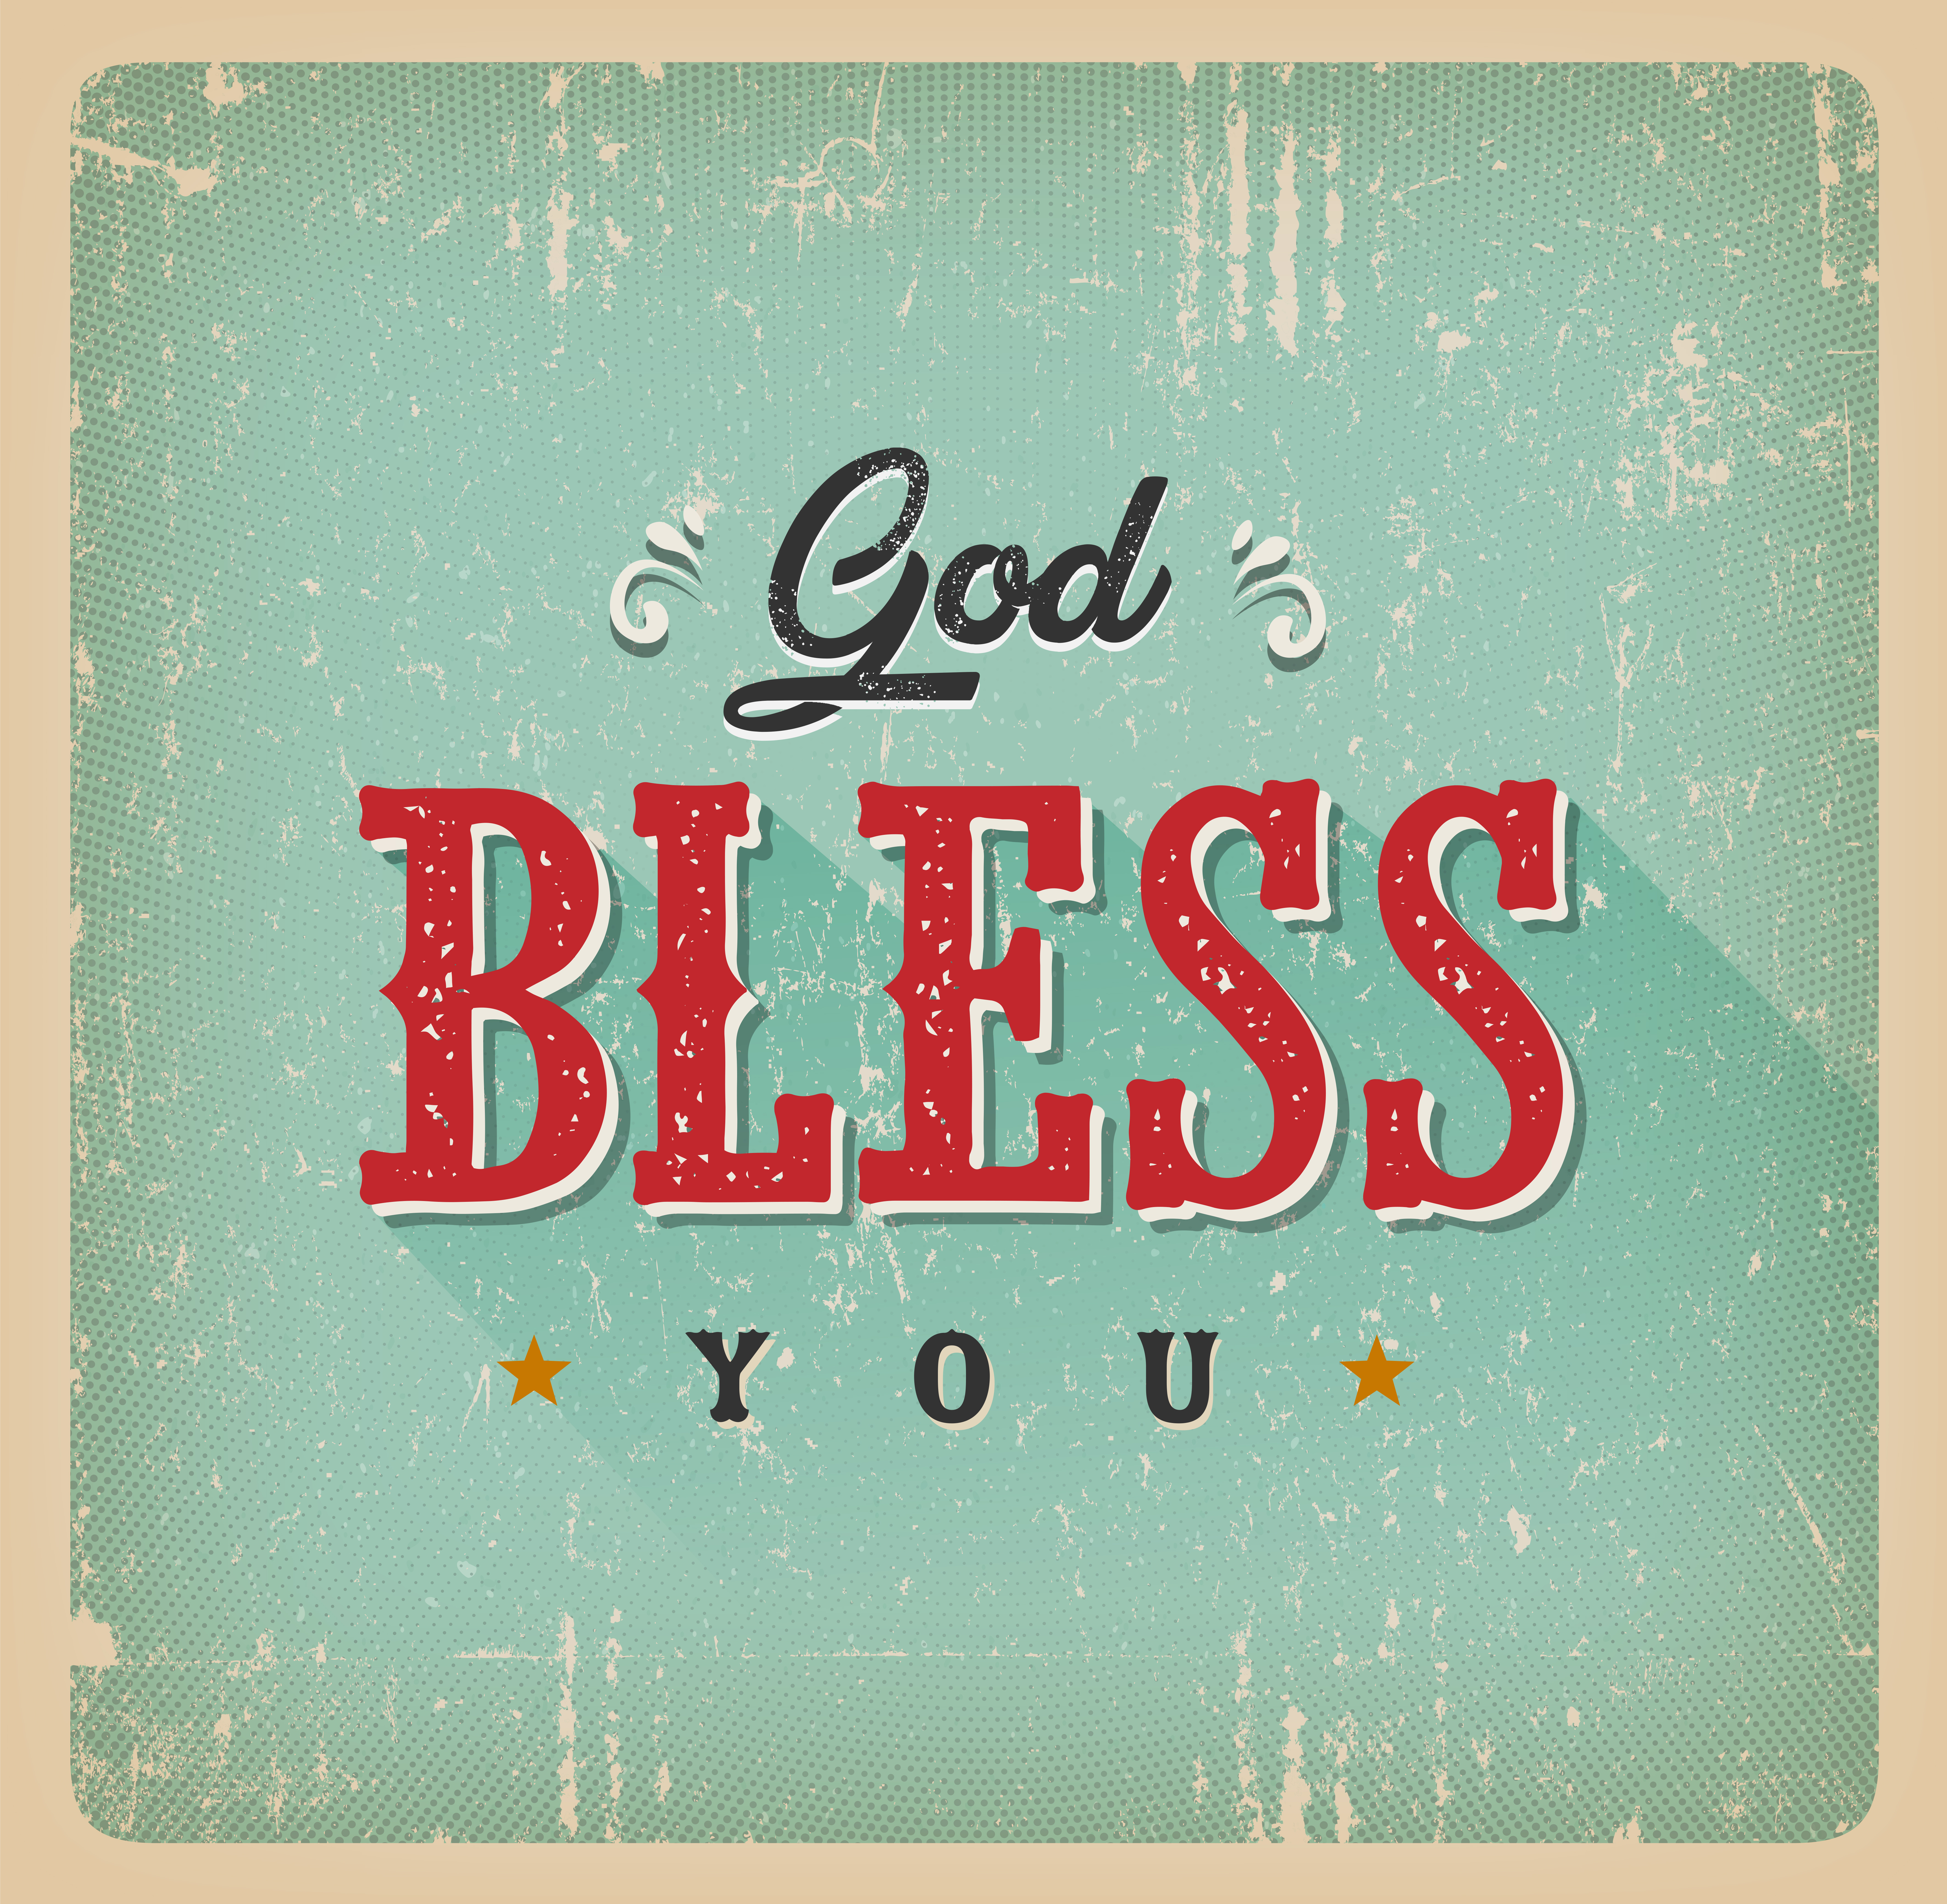 god-bless-you-card-266930-vector-art-at-vecteezy